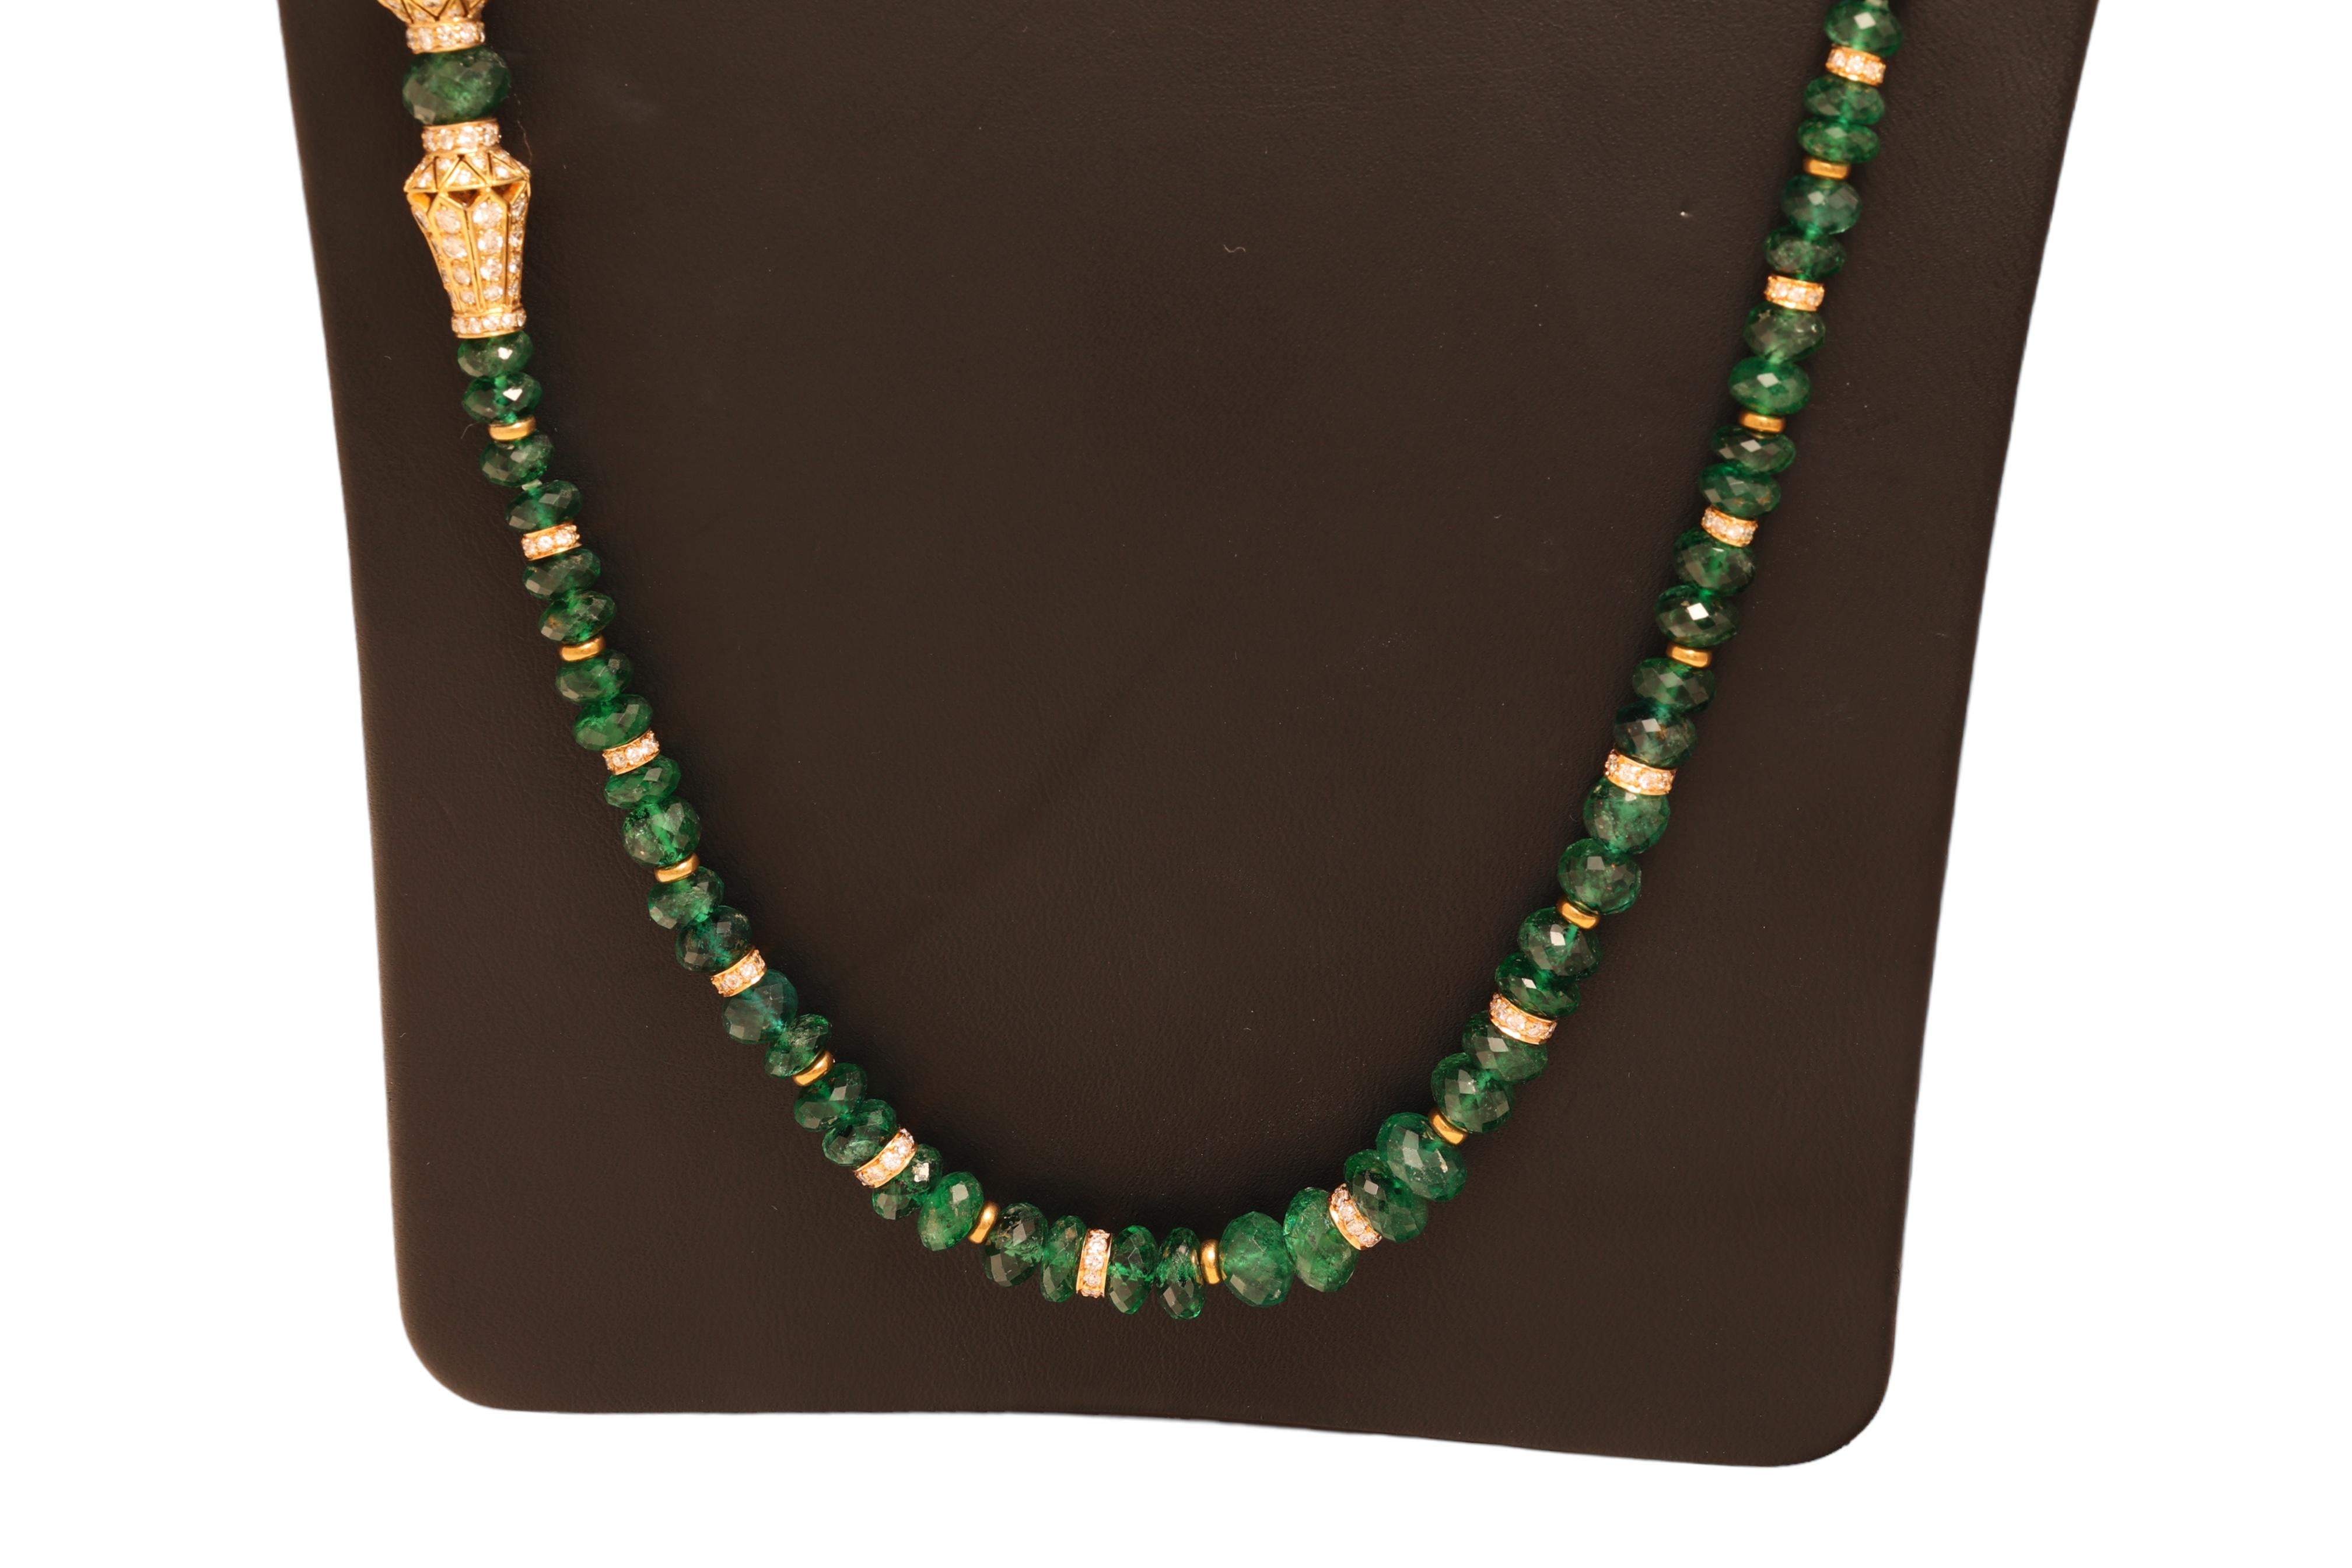 Adler Genèva 18kt Gold Necklaces 480ct Faceted Bead Emeralds CGL Certified For Sale 7